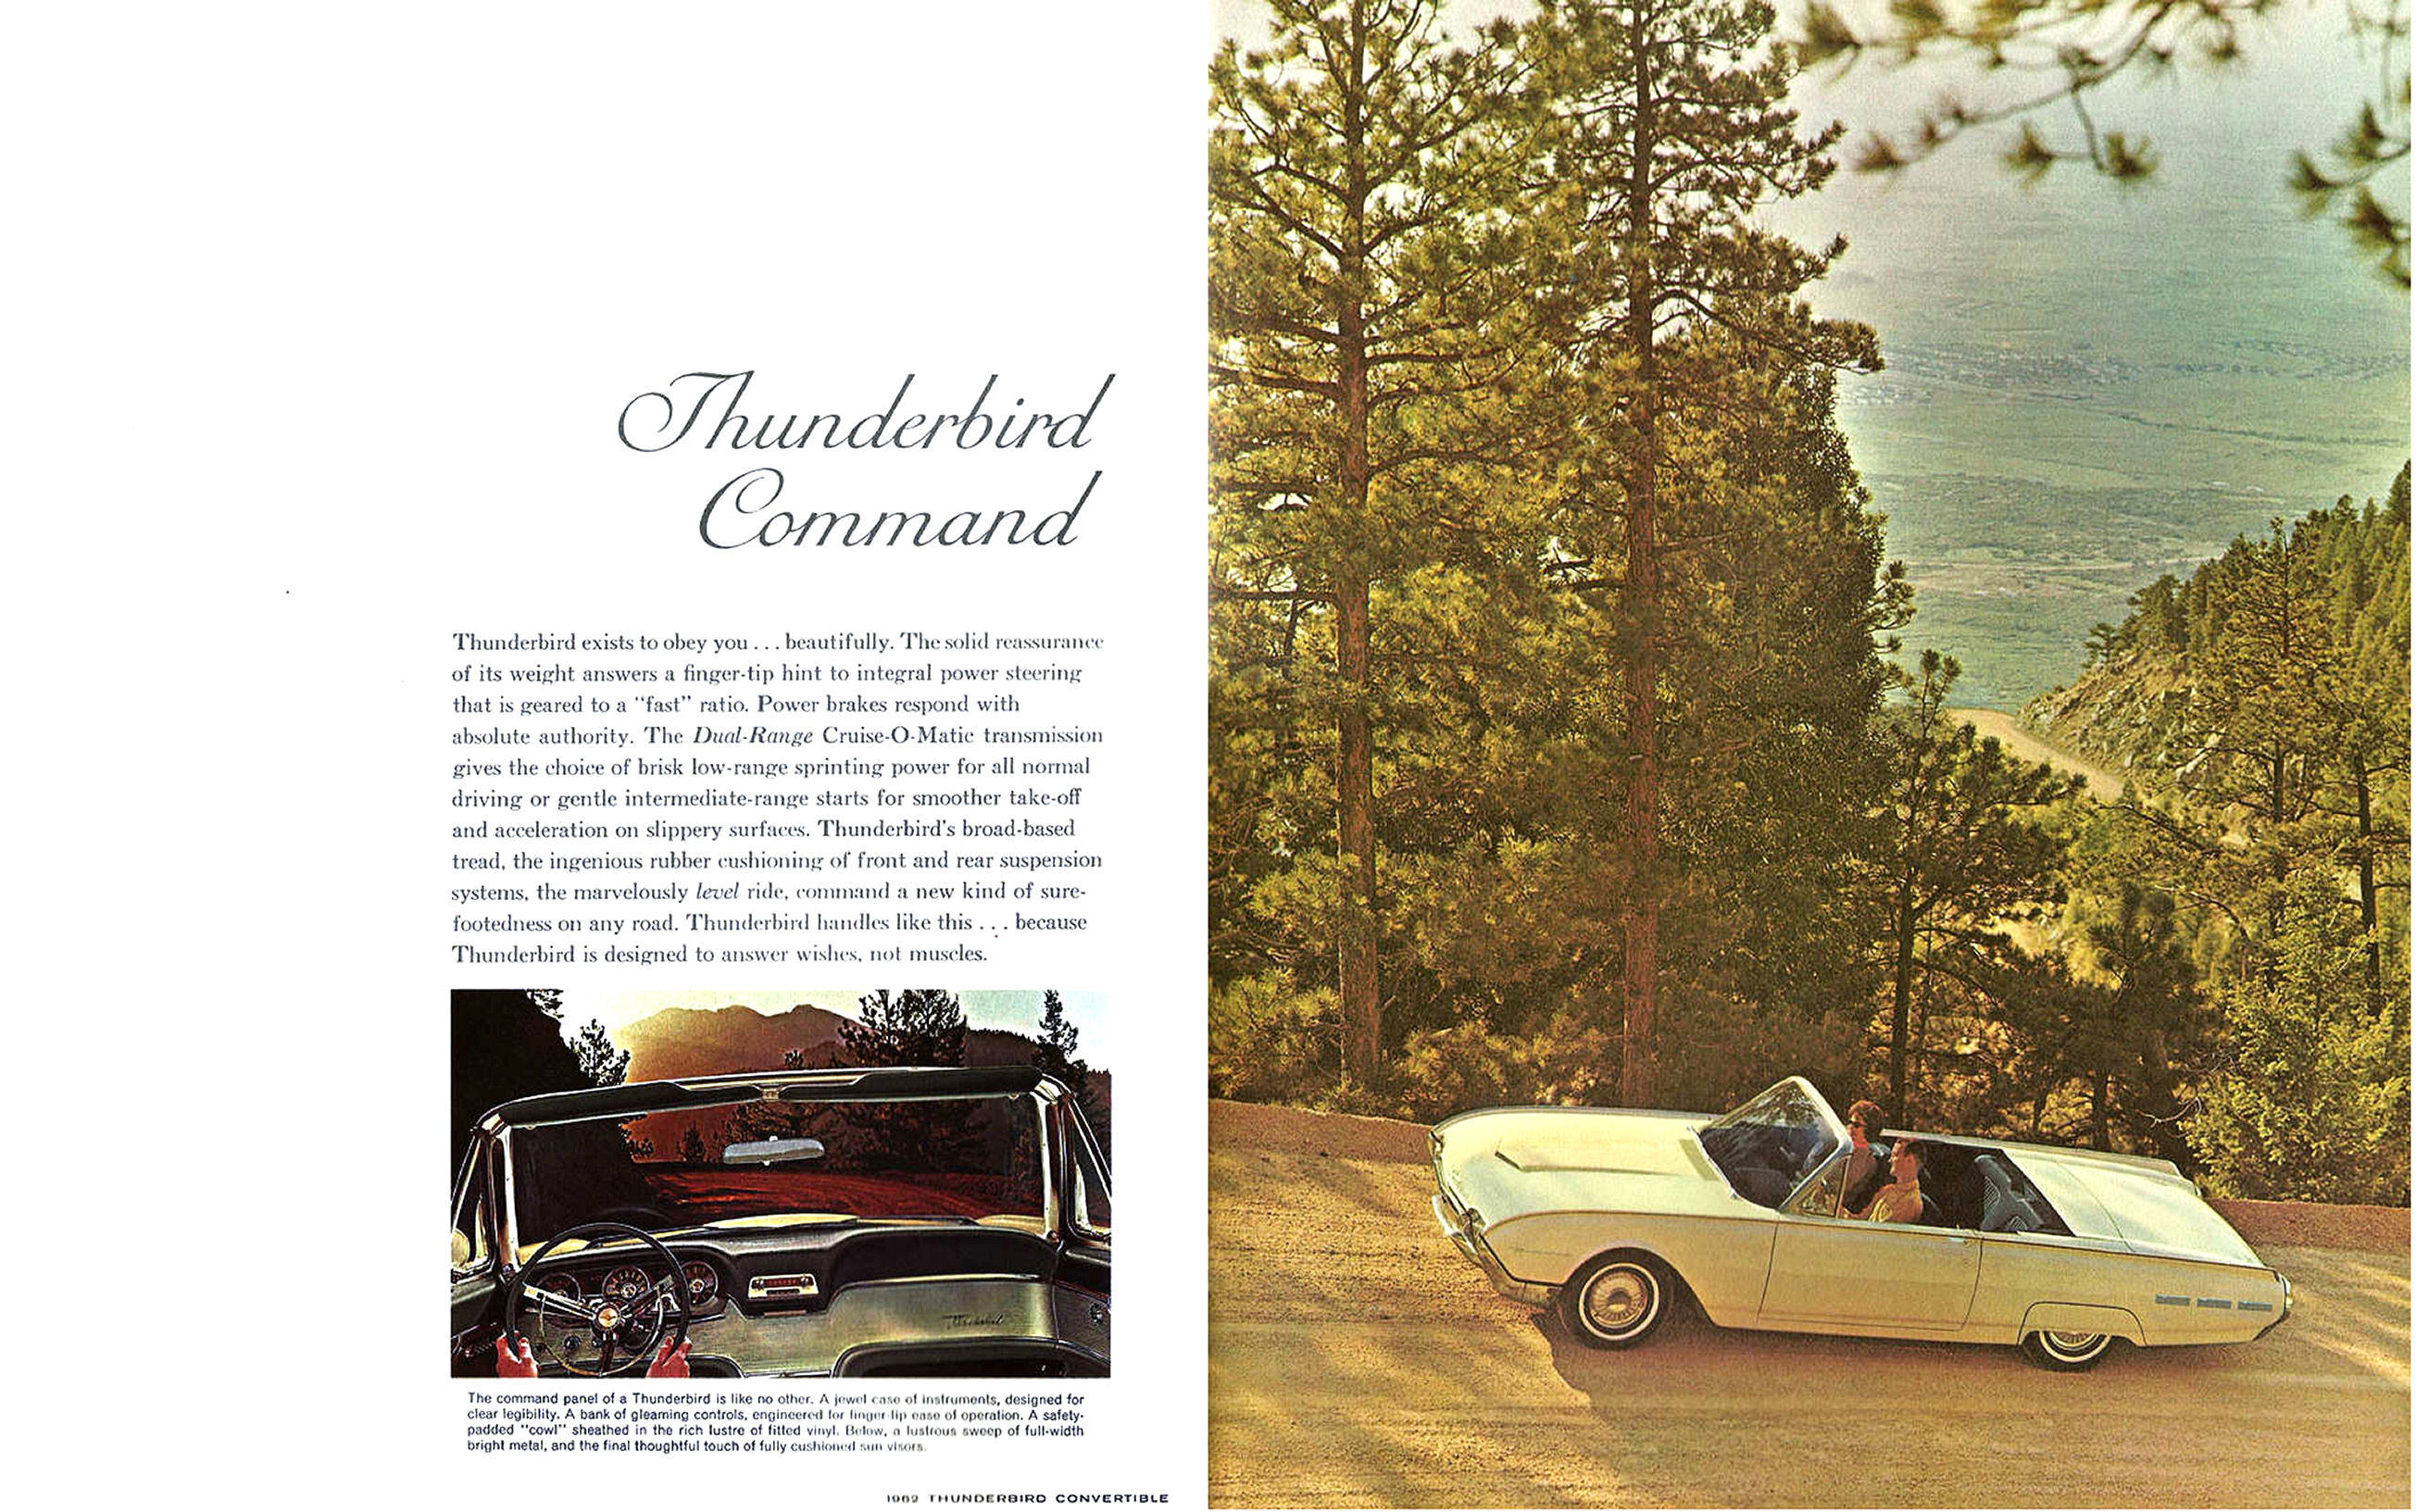 1962_Ford_Thunderbird-06-07